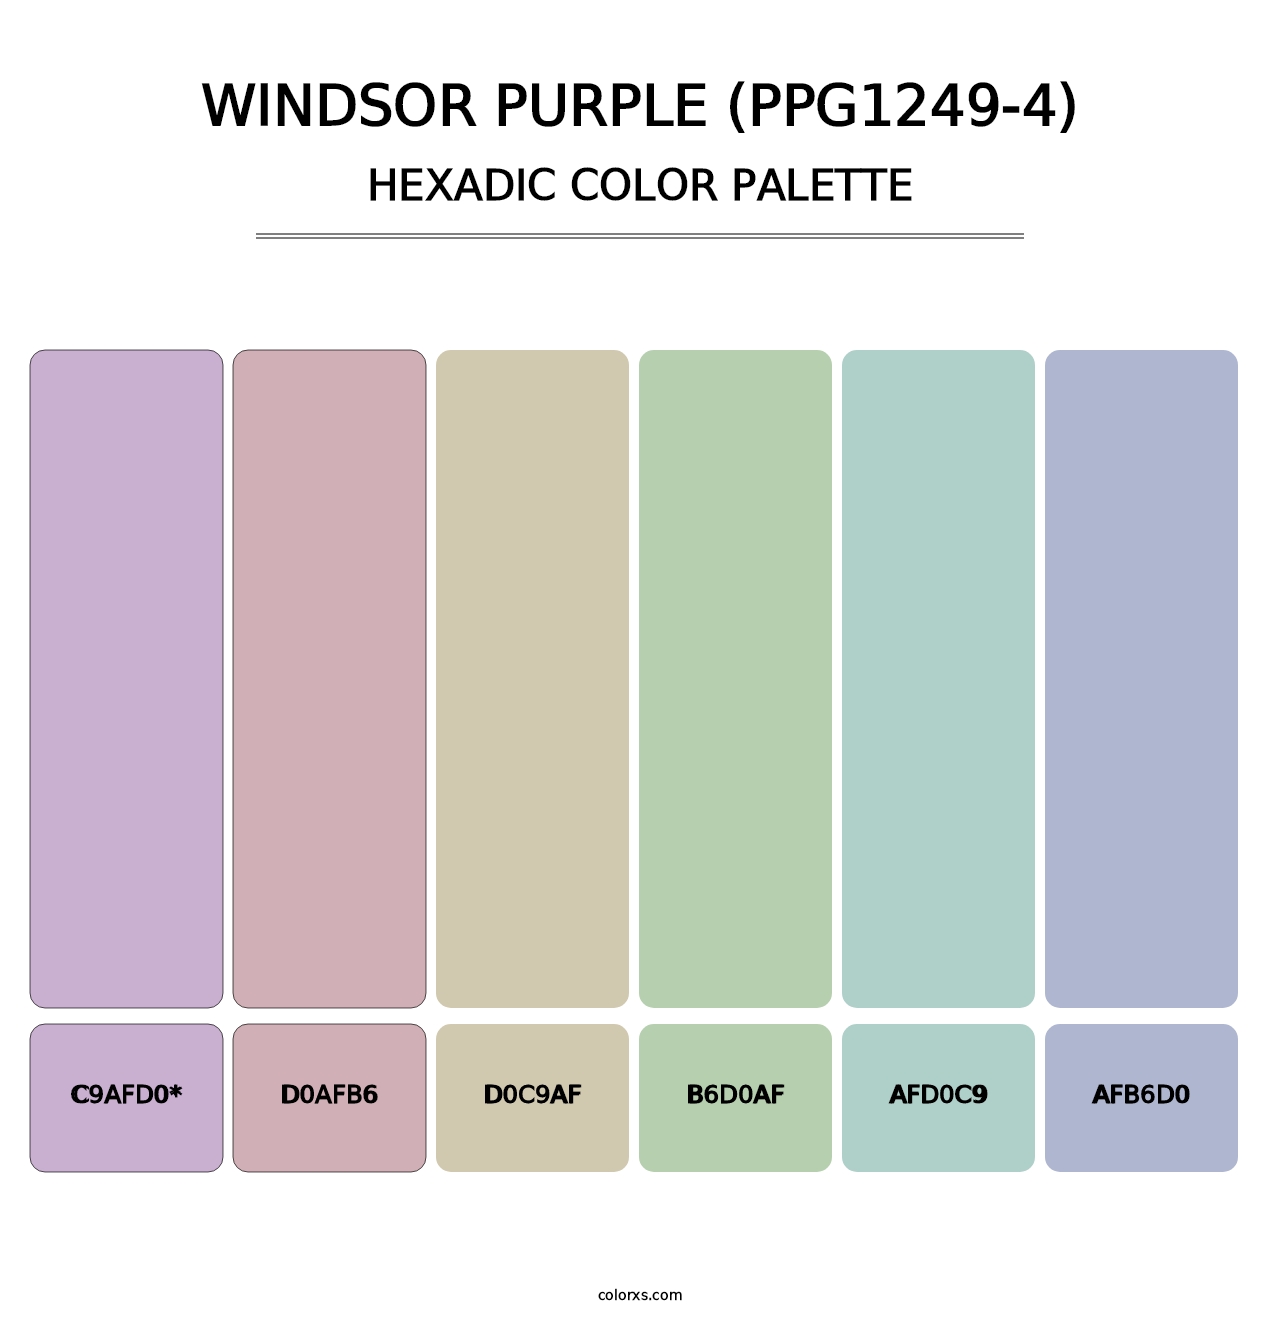 Windsor Purple (PPG1249-4) - Hexadic Color Palette